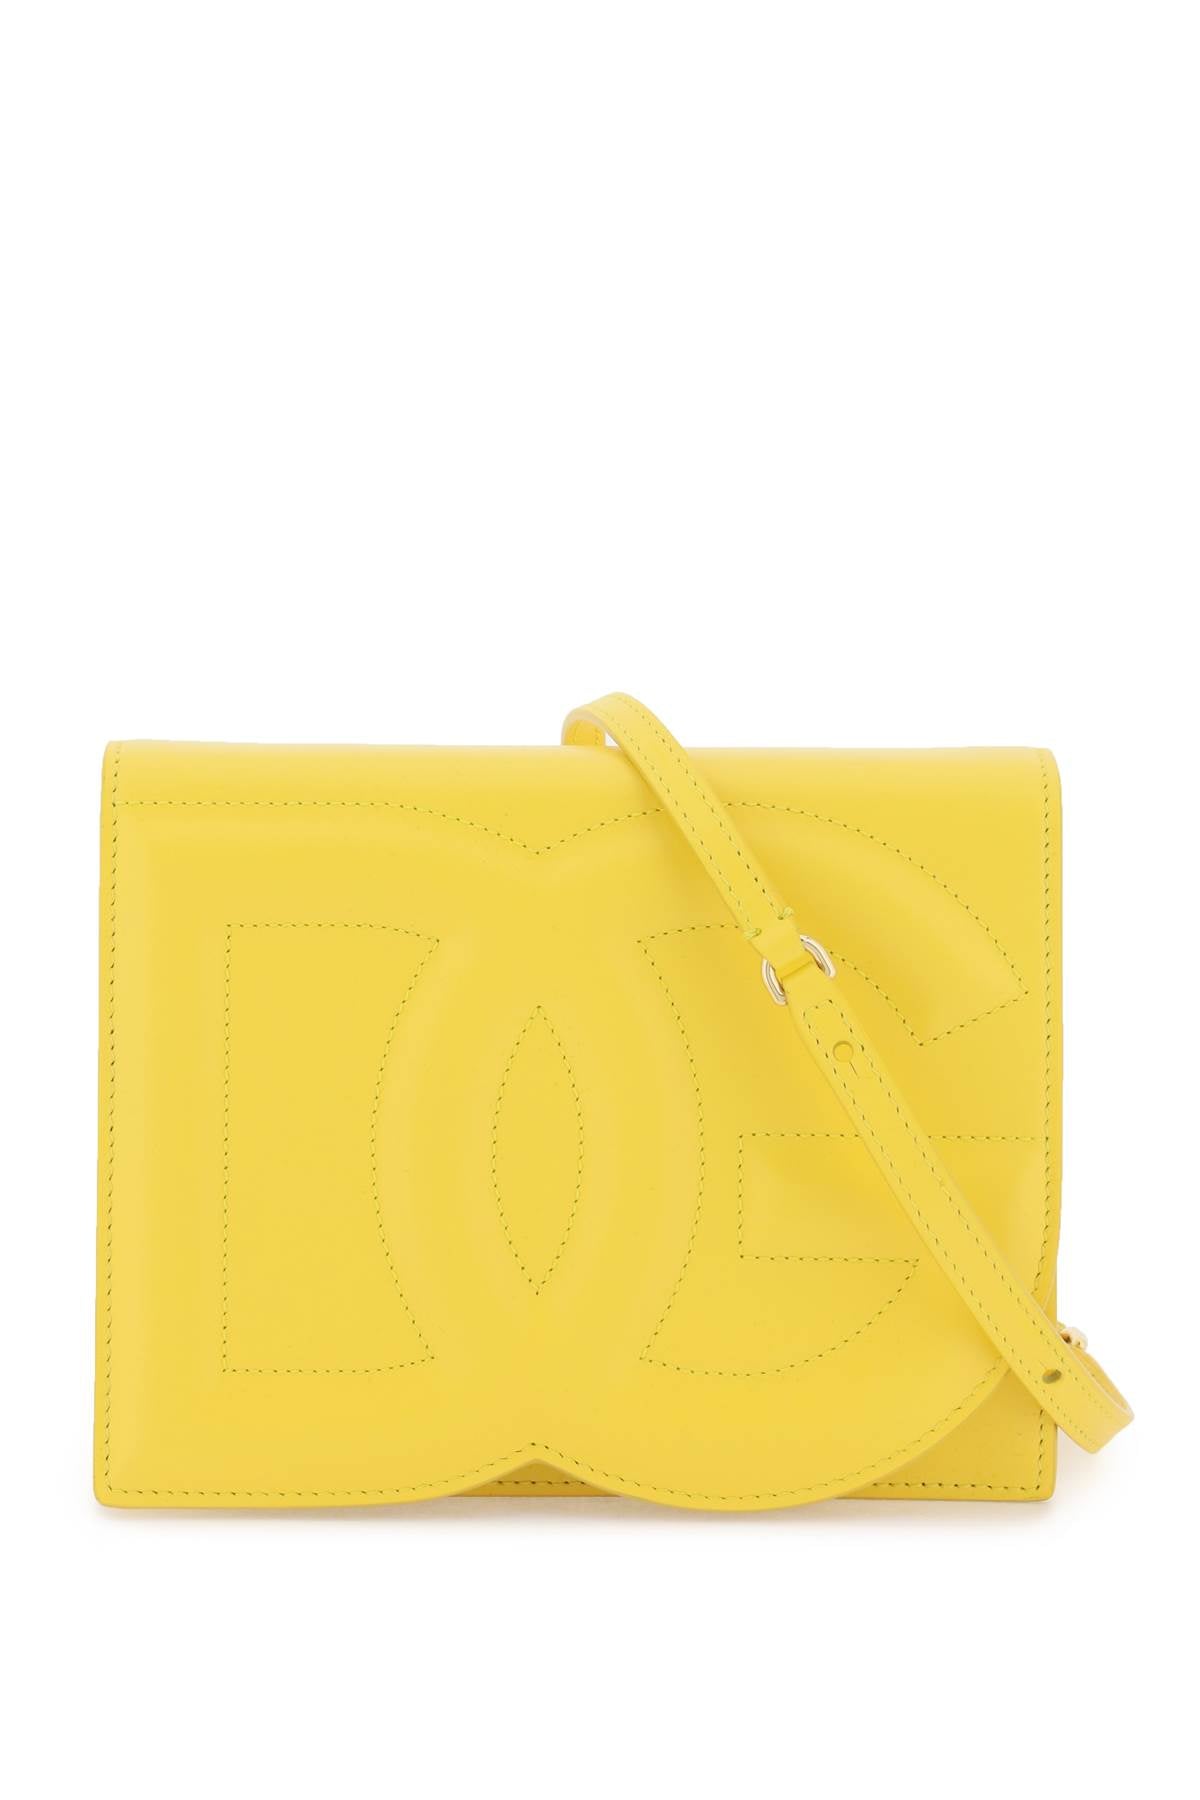 DOLCE & GABBANA Fashionable Yellow Crossbody Handbag for Women - SS24 Collection